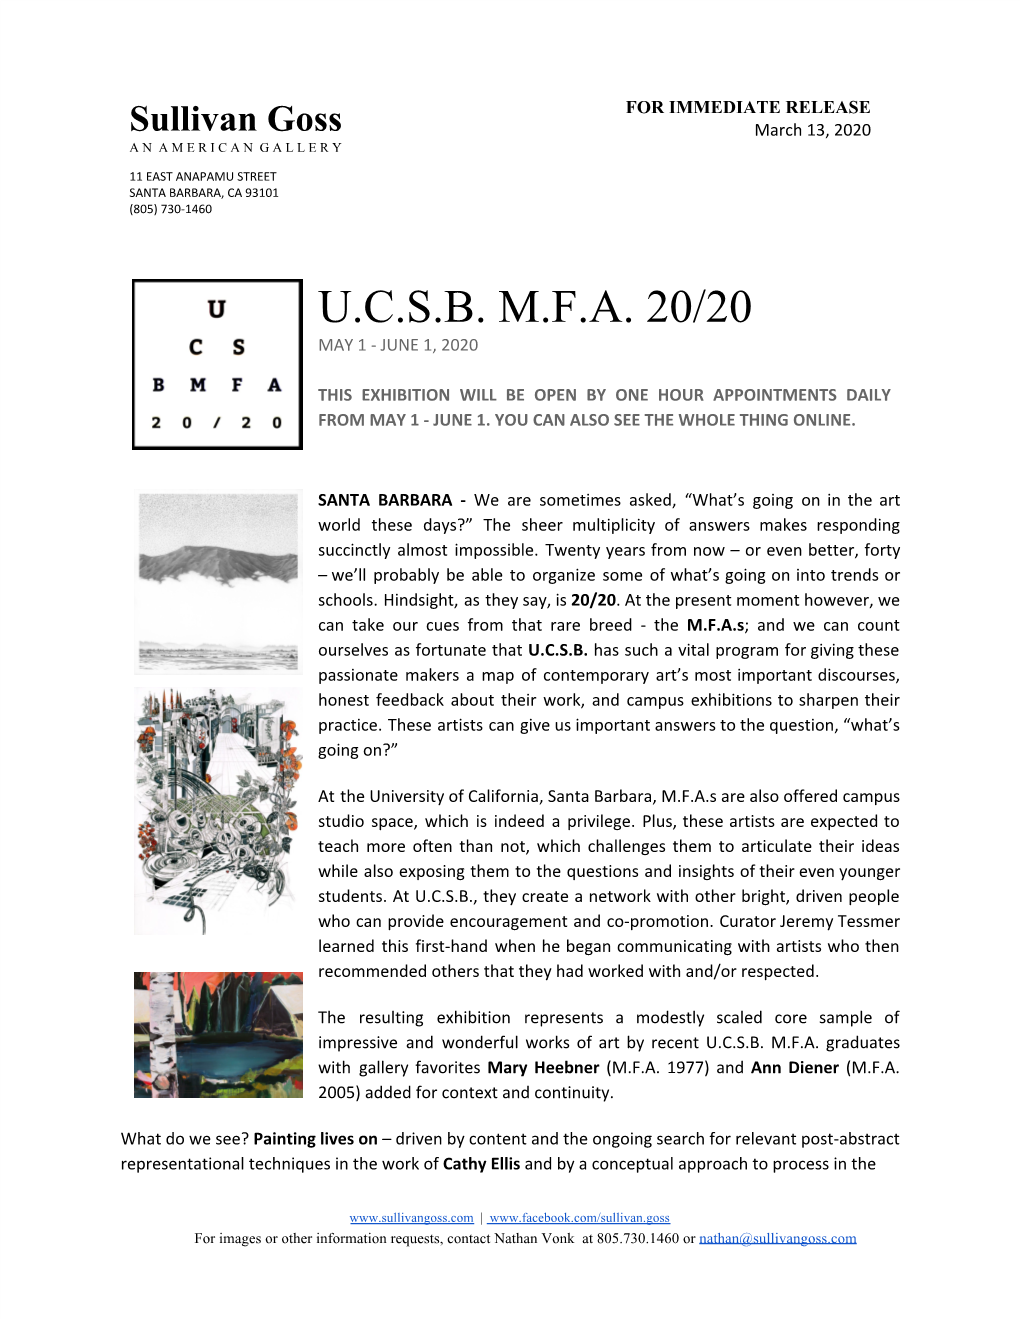 U.C.S.B. M.F.A. 20/20 May 1 - June 1, 2020